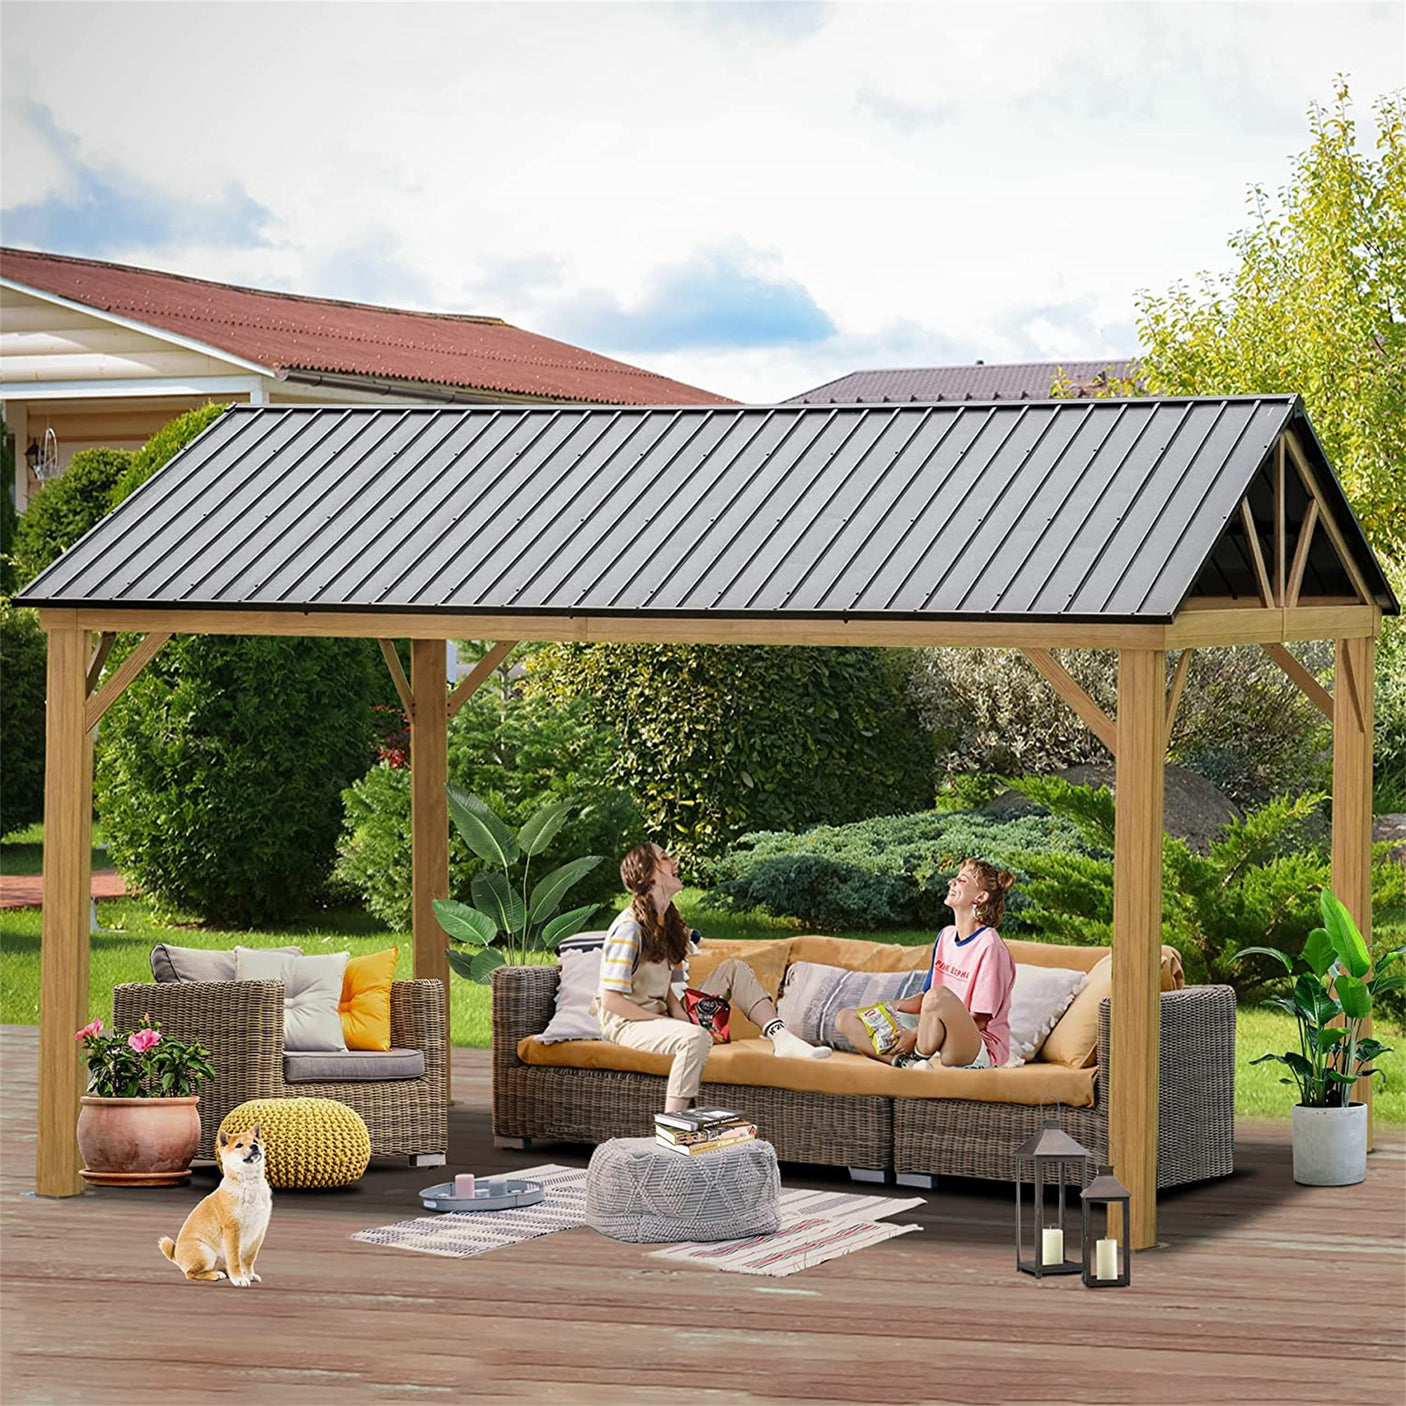 12'x14' Hardtop Gazebo Outdoor Aluminum Gazebo with Galvanized Steel Gable Canopy for Patio Decks Backyard (Yellow-Brown)